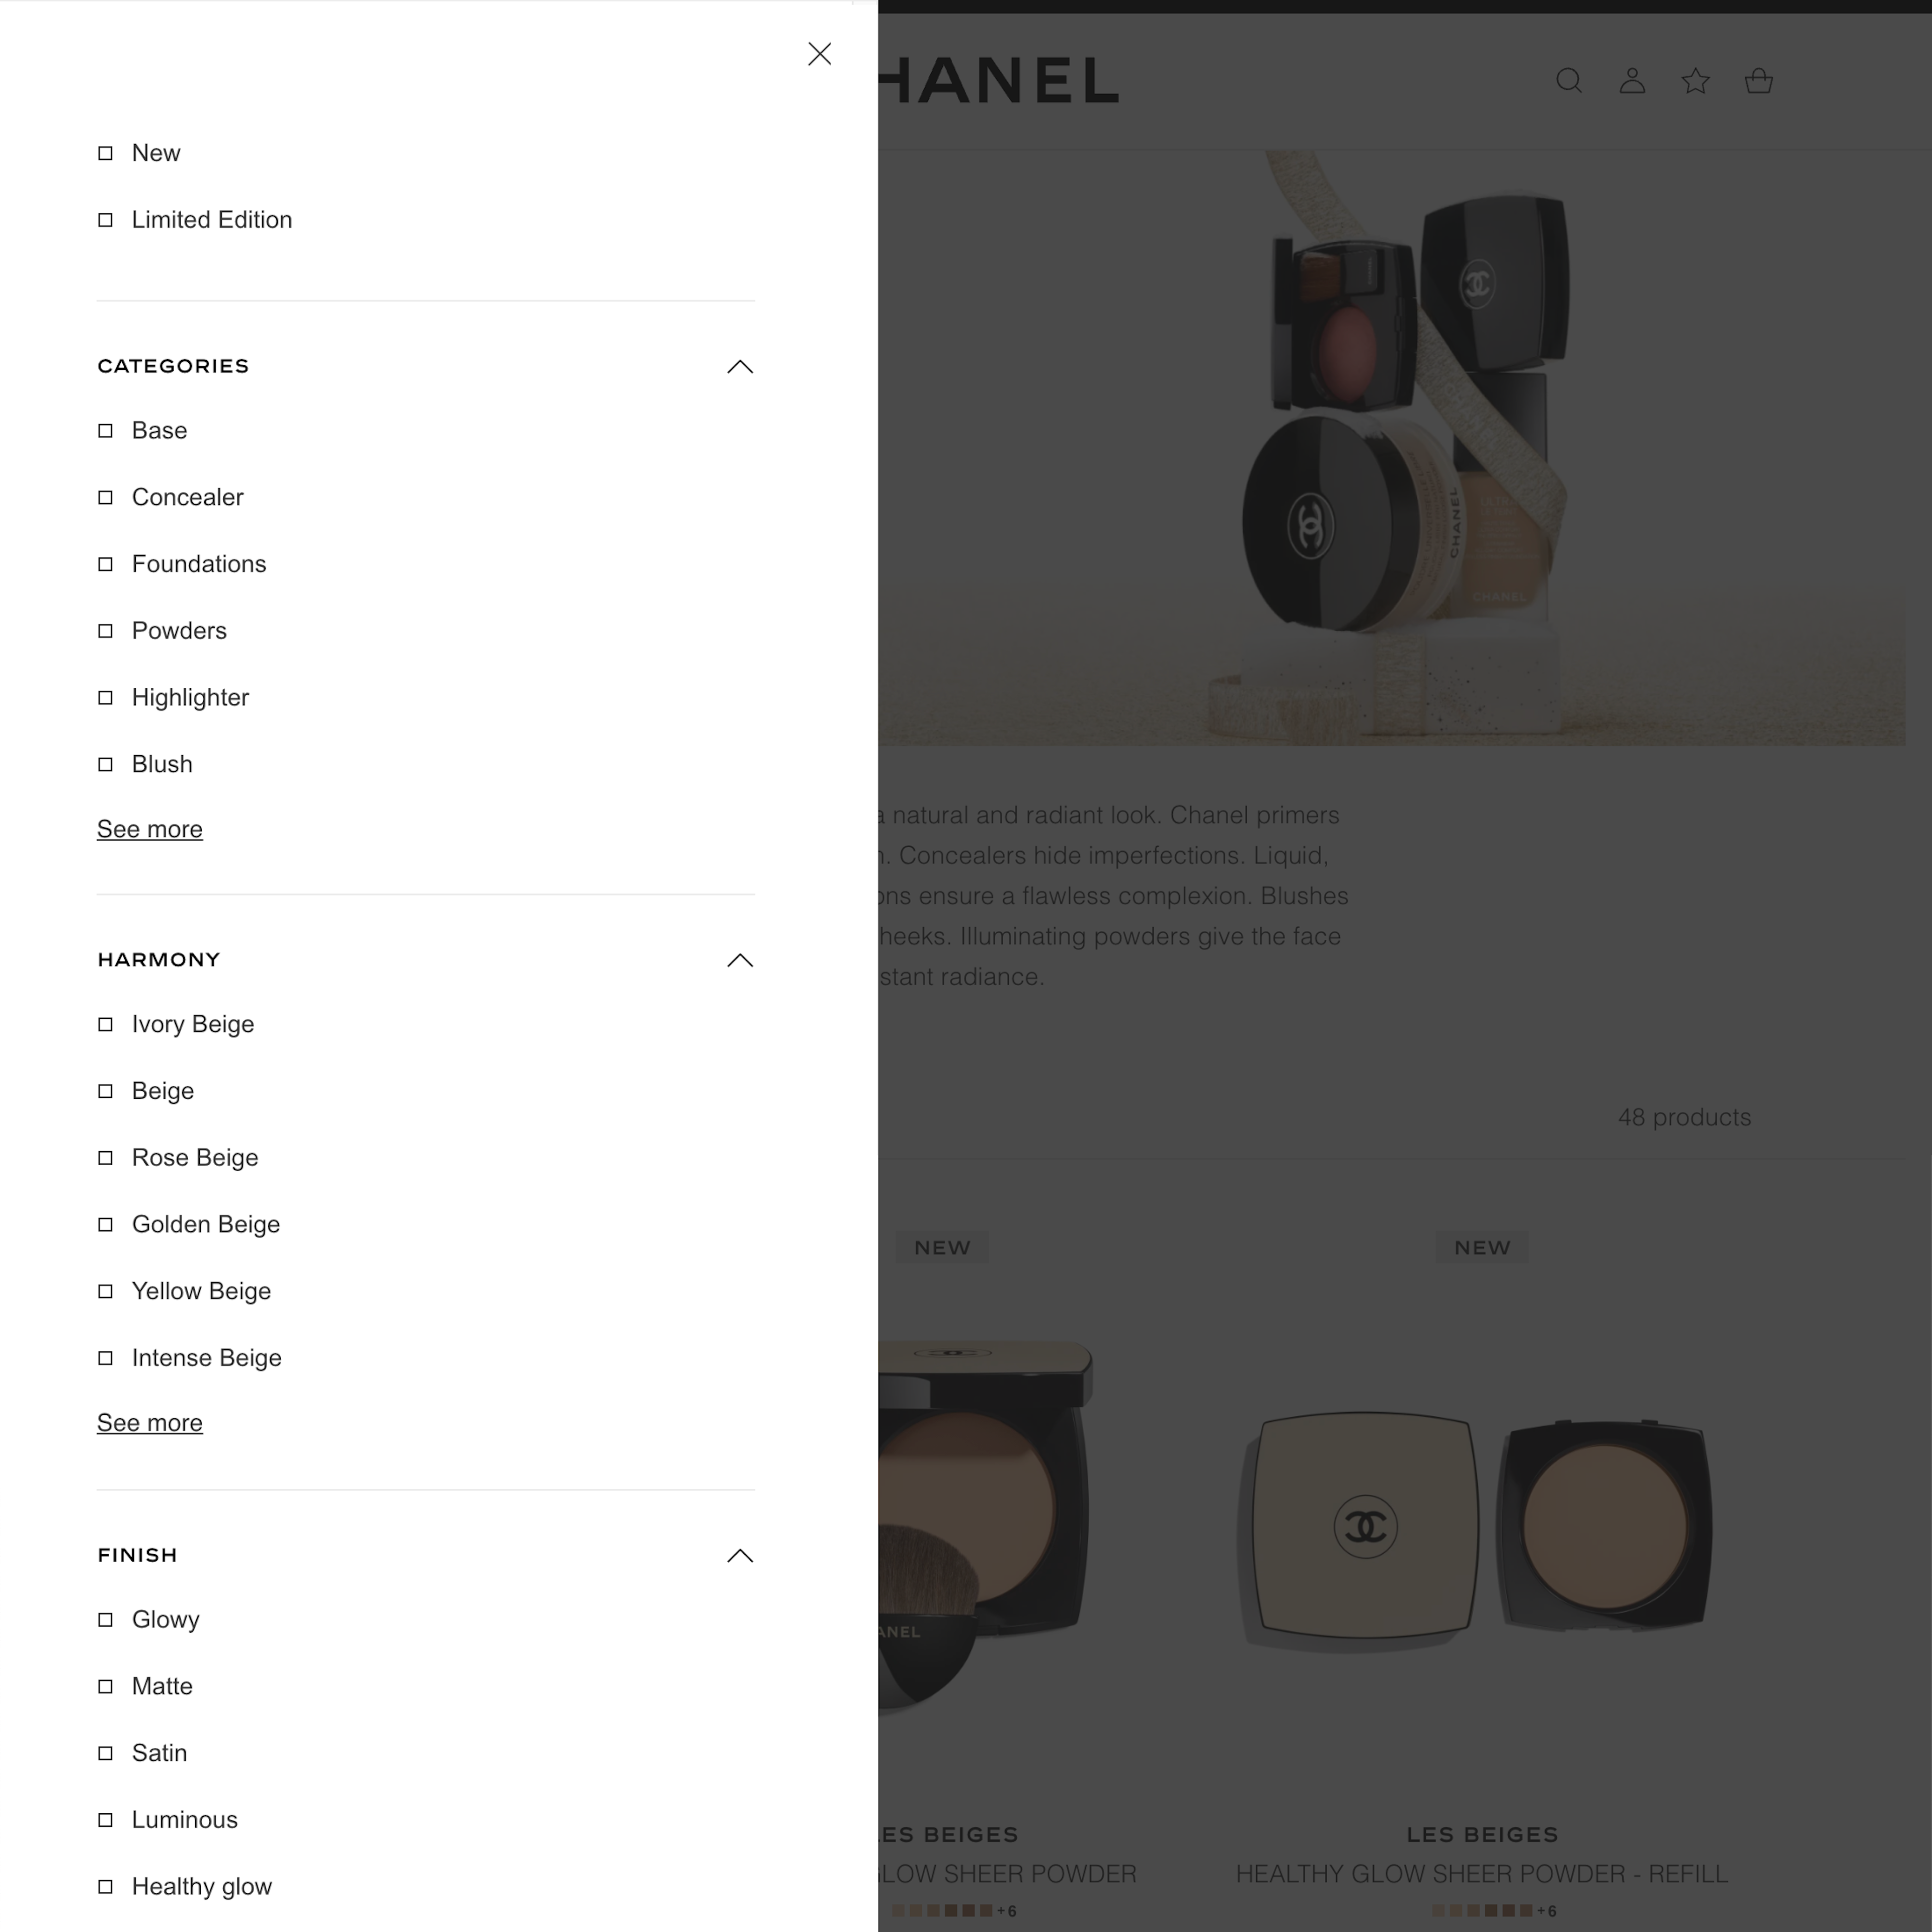 Desktop screenshot of Chanel